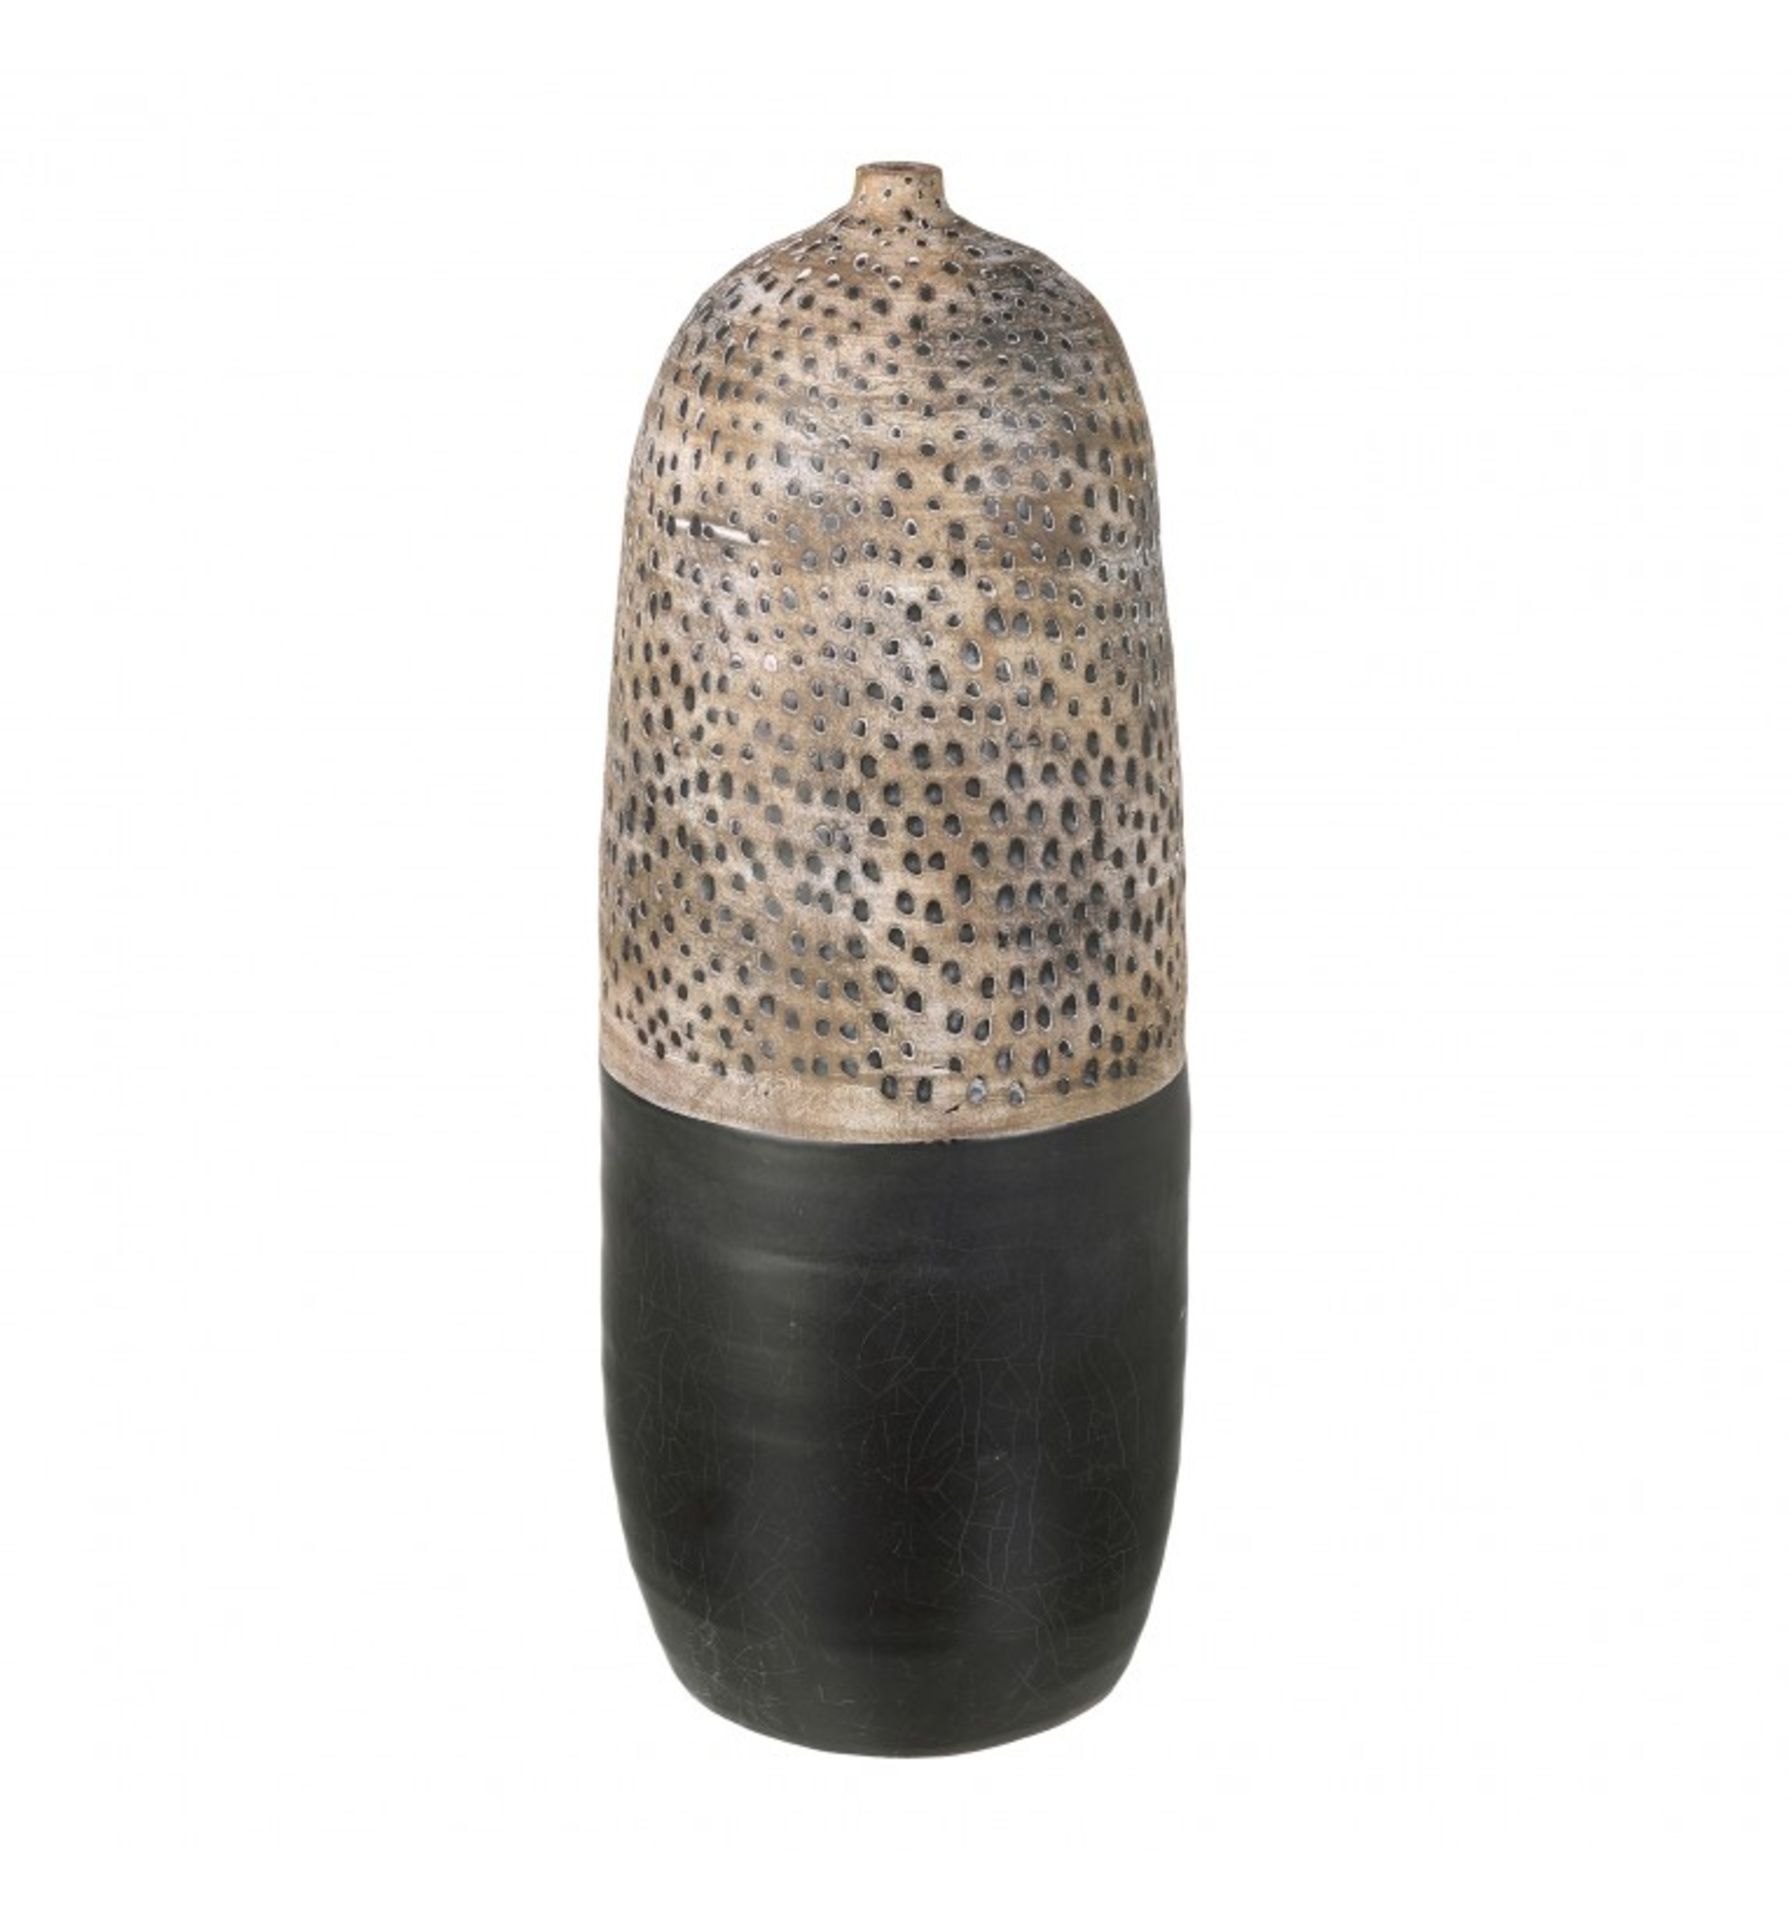 Kelmscott Vase Black & Natural 500x190mm (5011745889558)